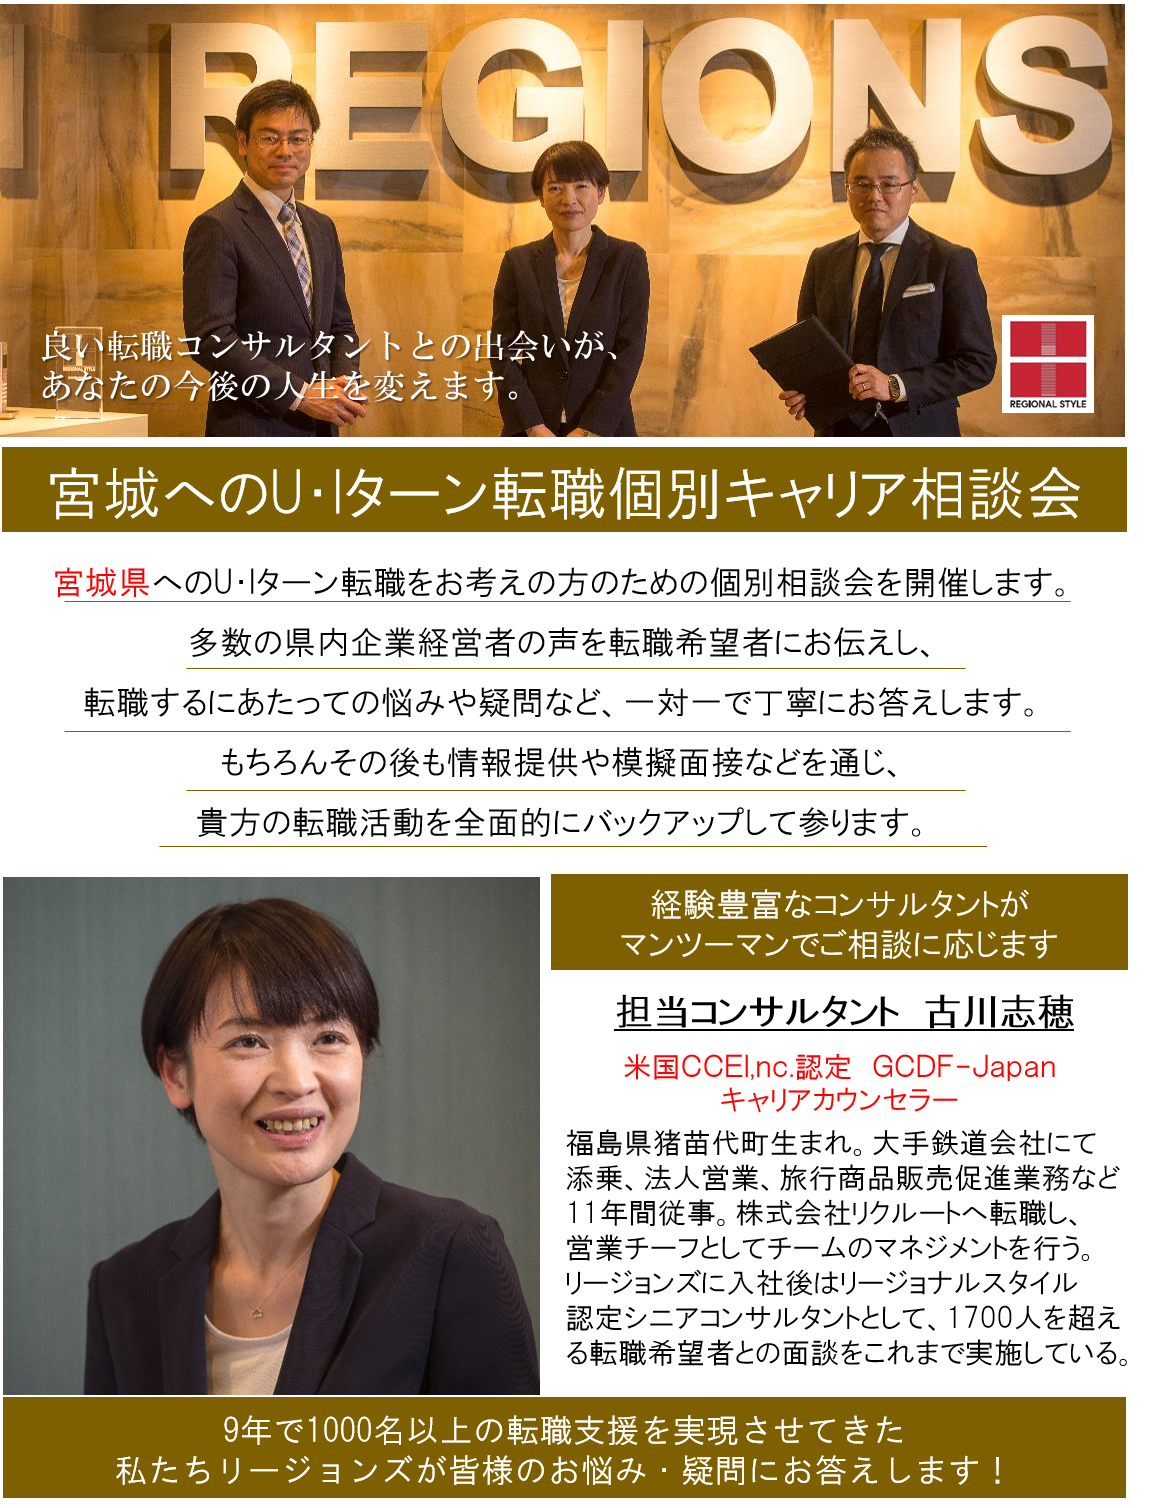 http://www.regional.co.jp/career_mt/furukawa12.png